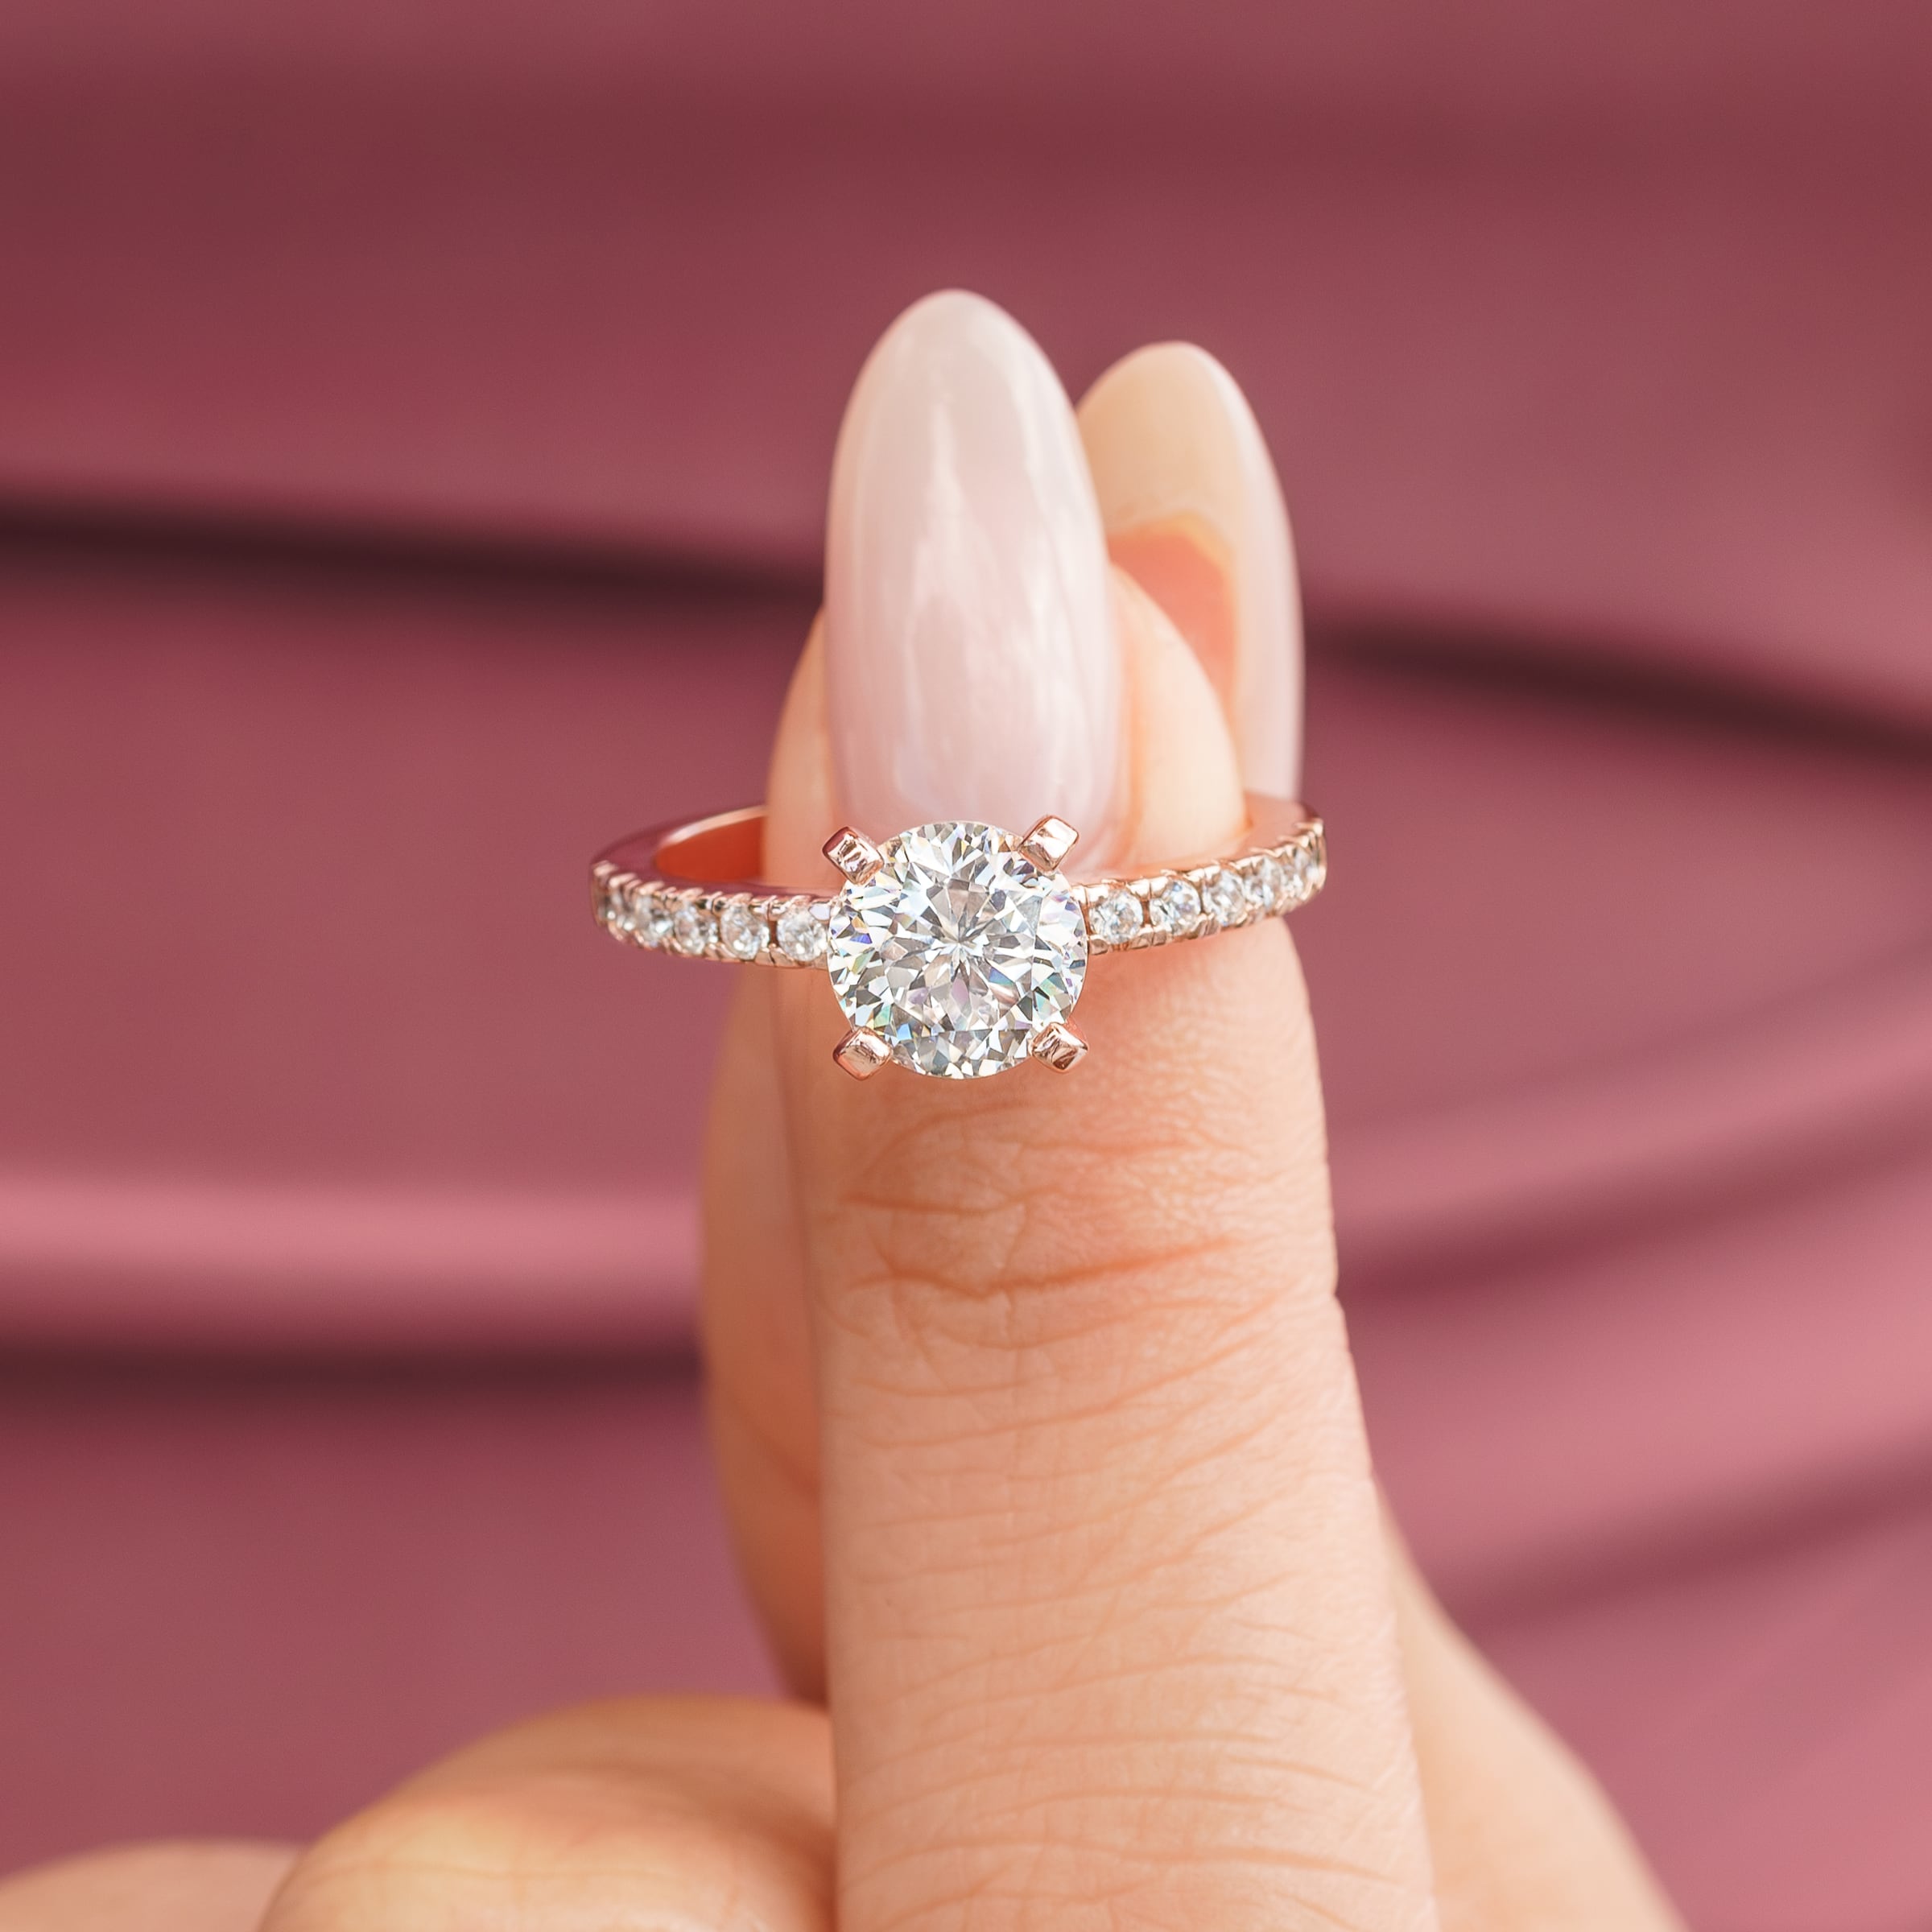 Gorgeous 18k Diamond Ring | Gold and Diamond Ring for Ladies